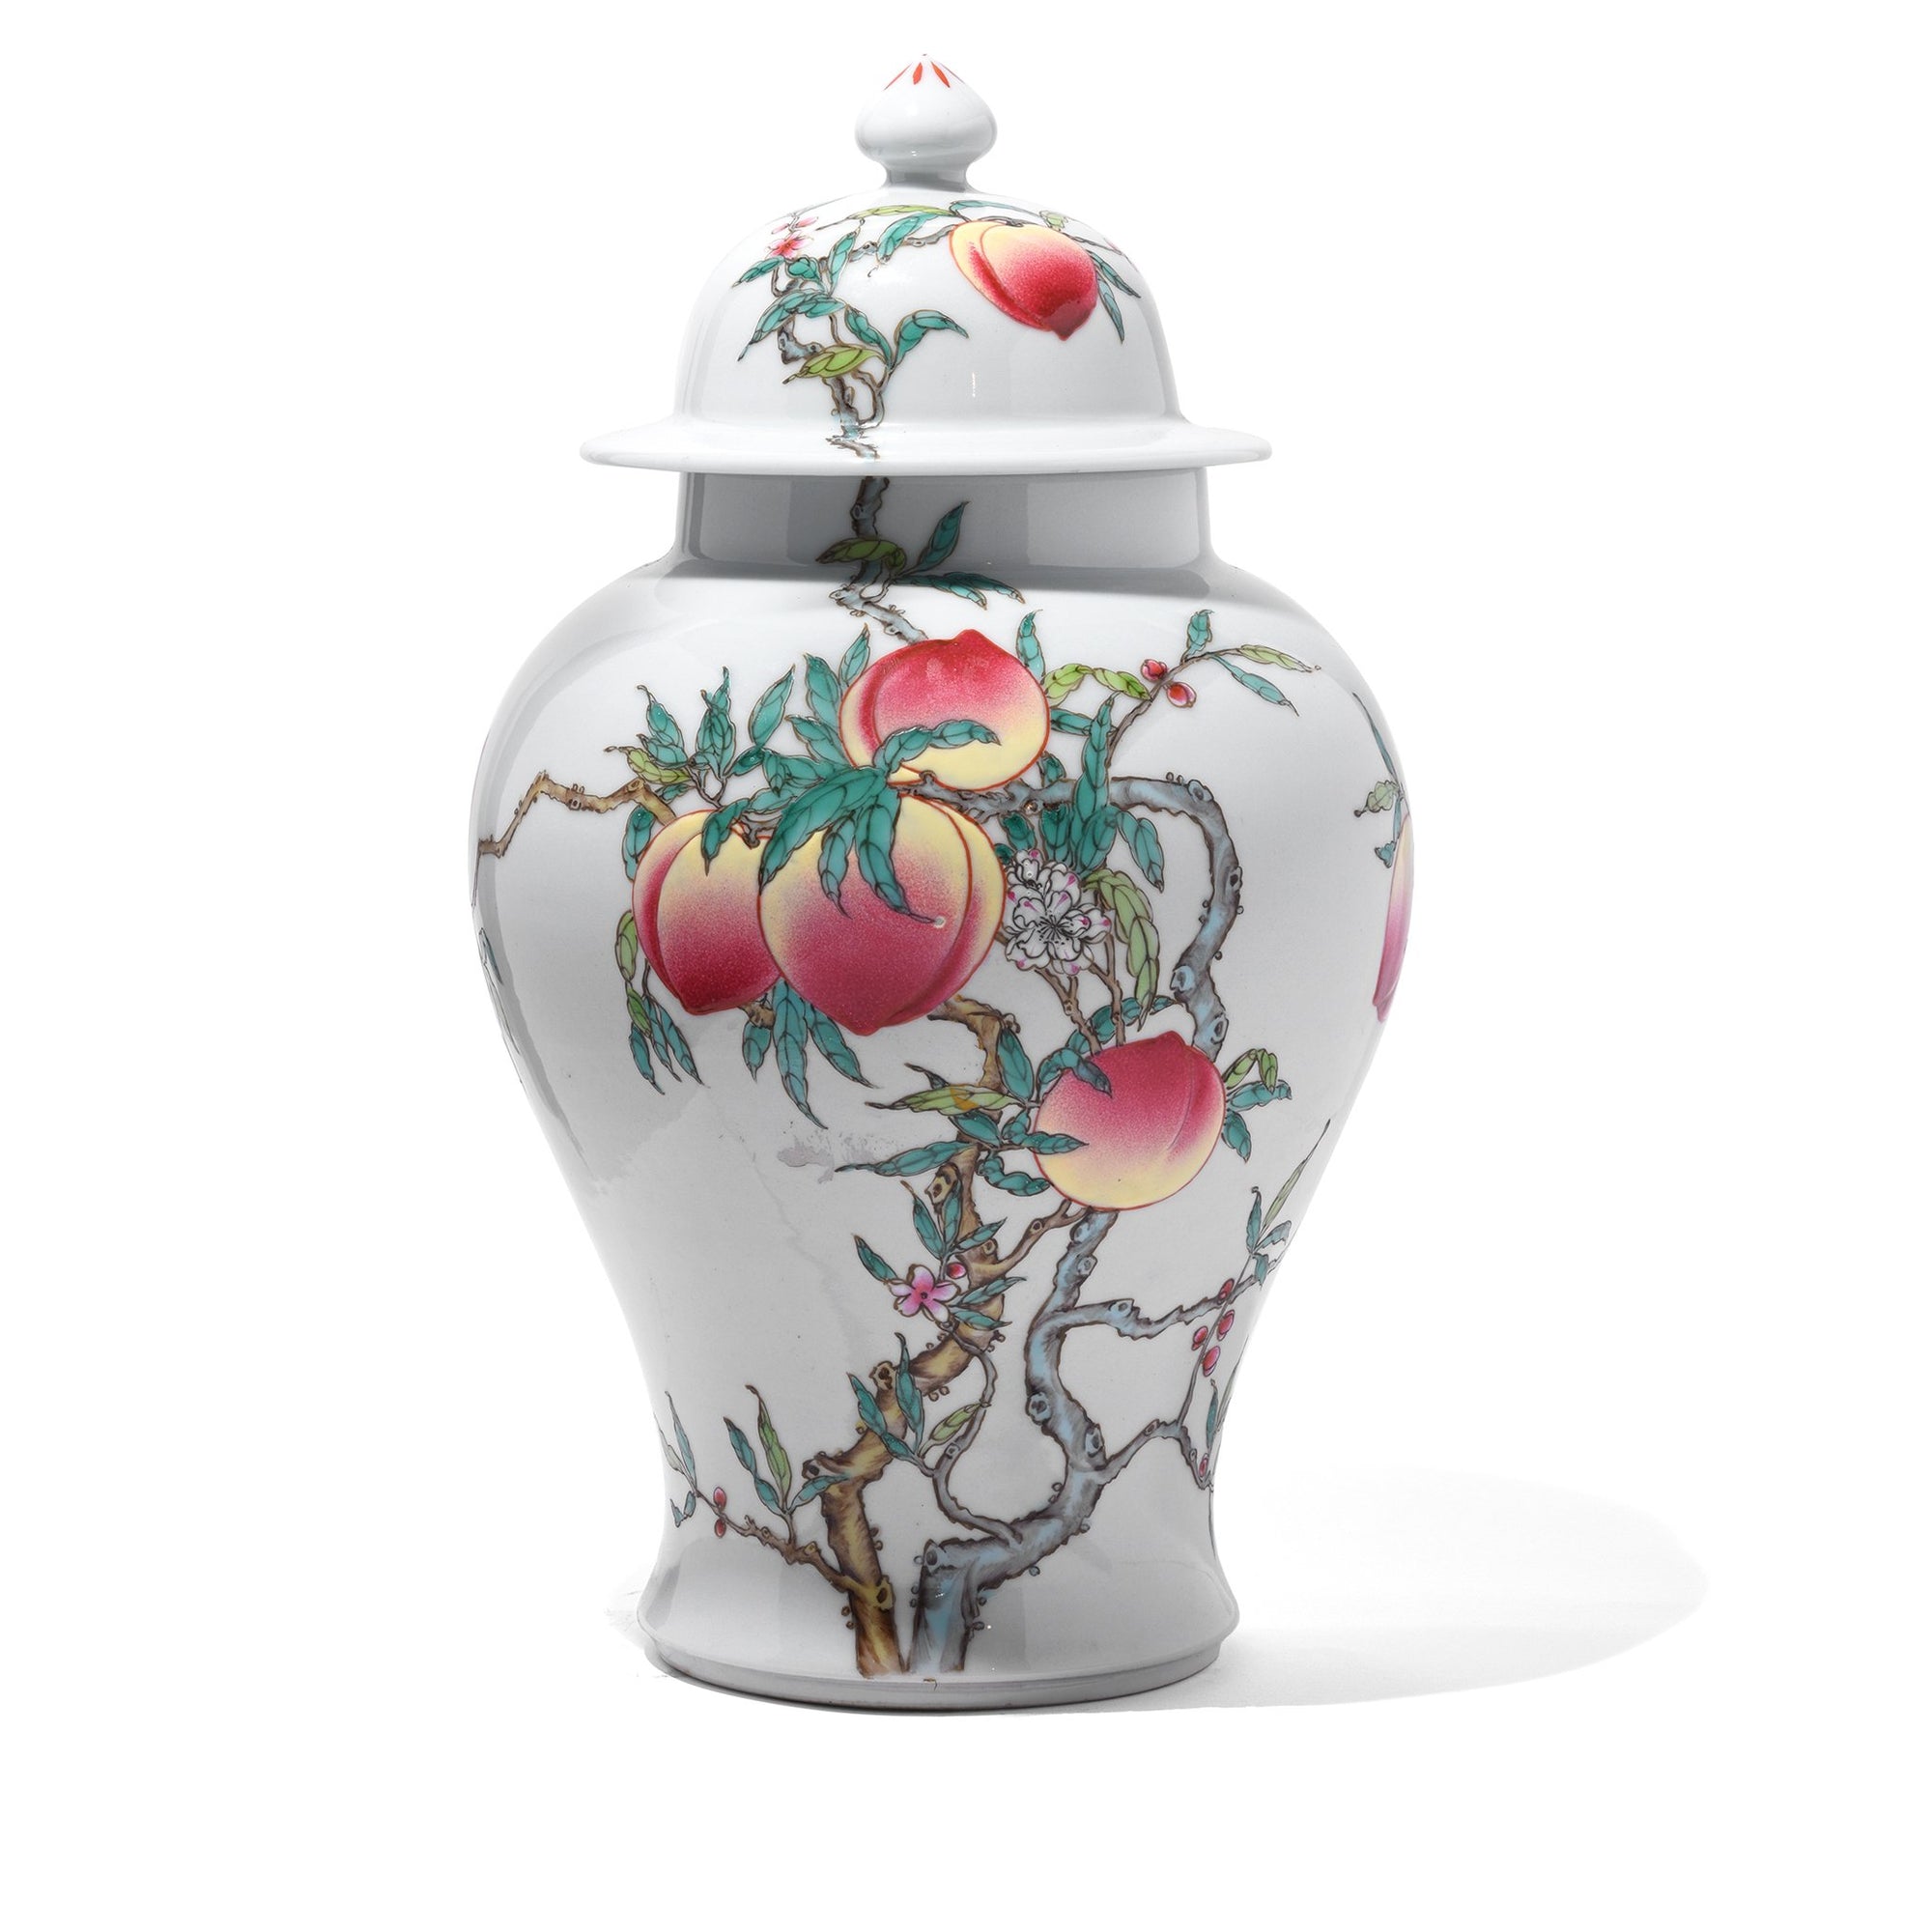 Chinese reproduction Porcelain Temple Jar - Nine Peach Design